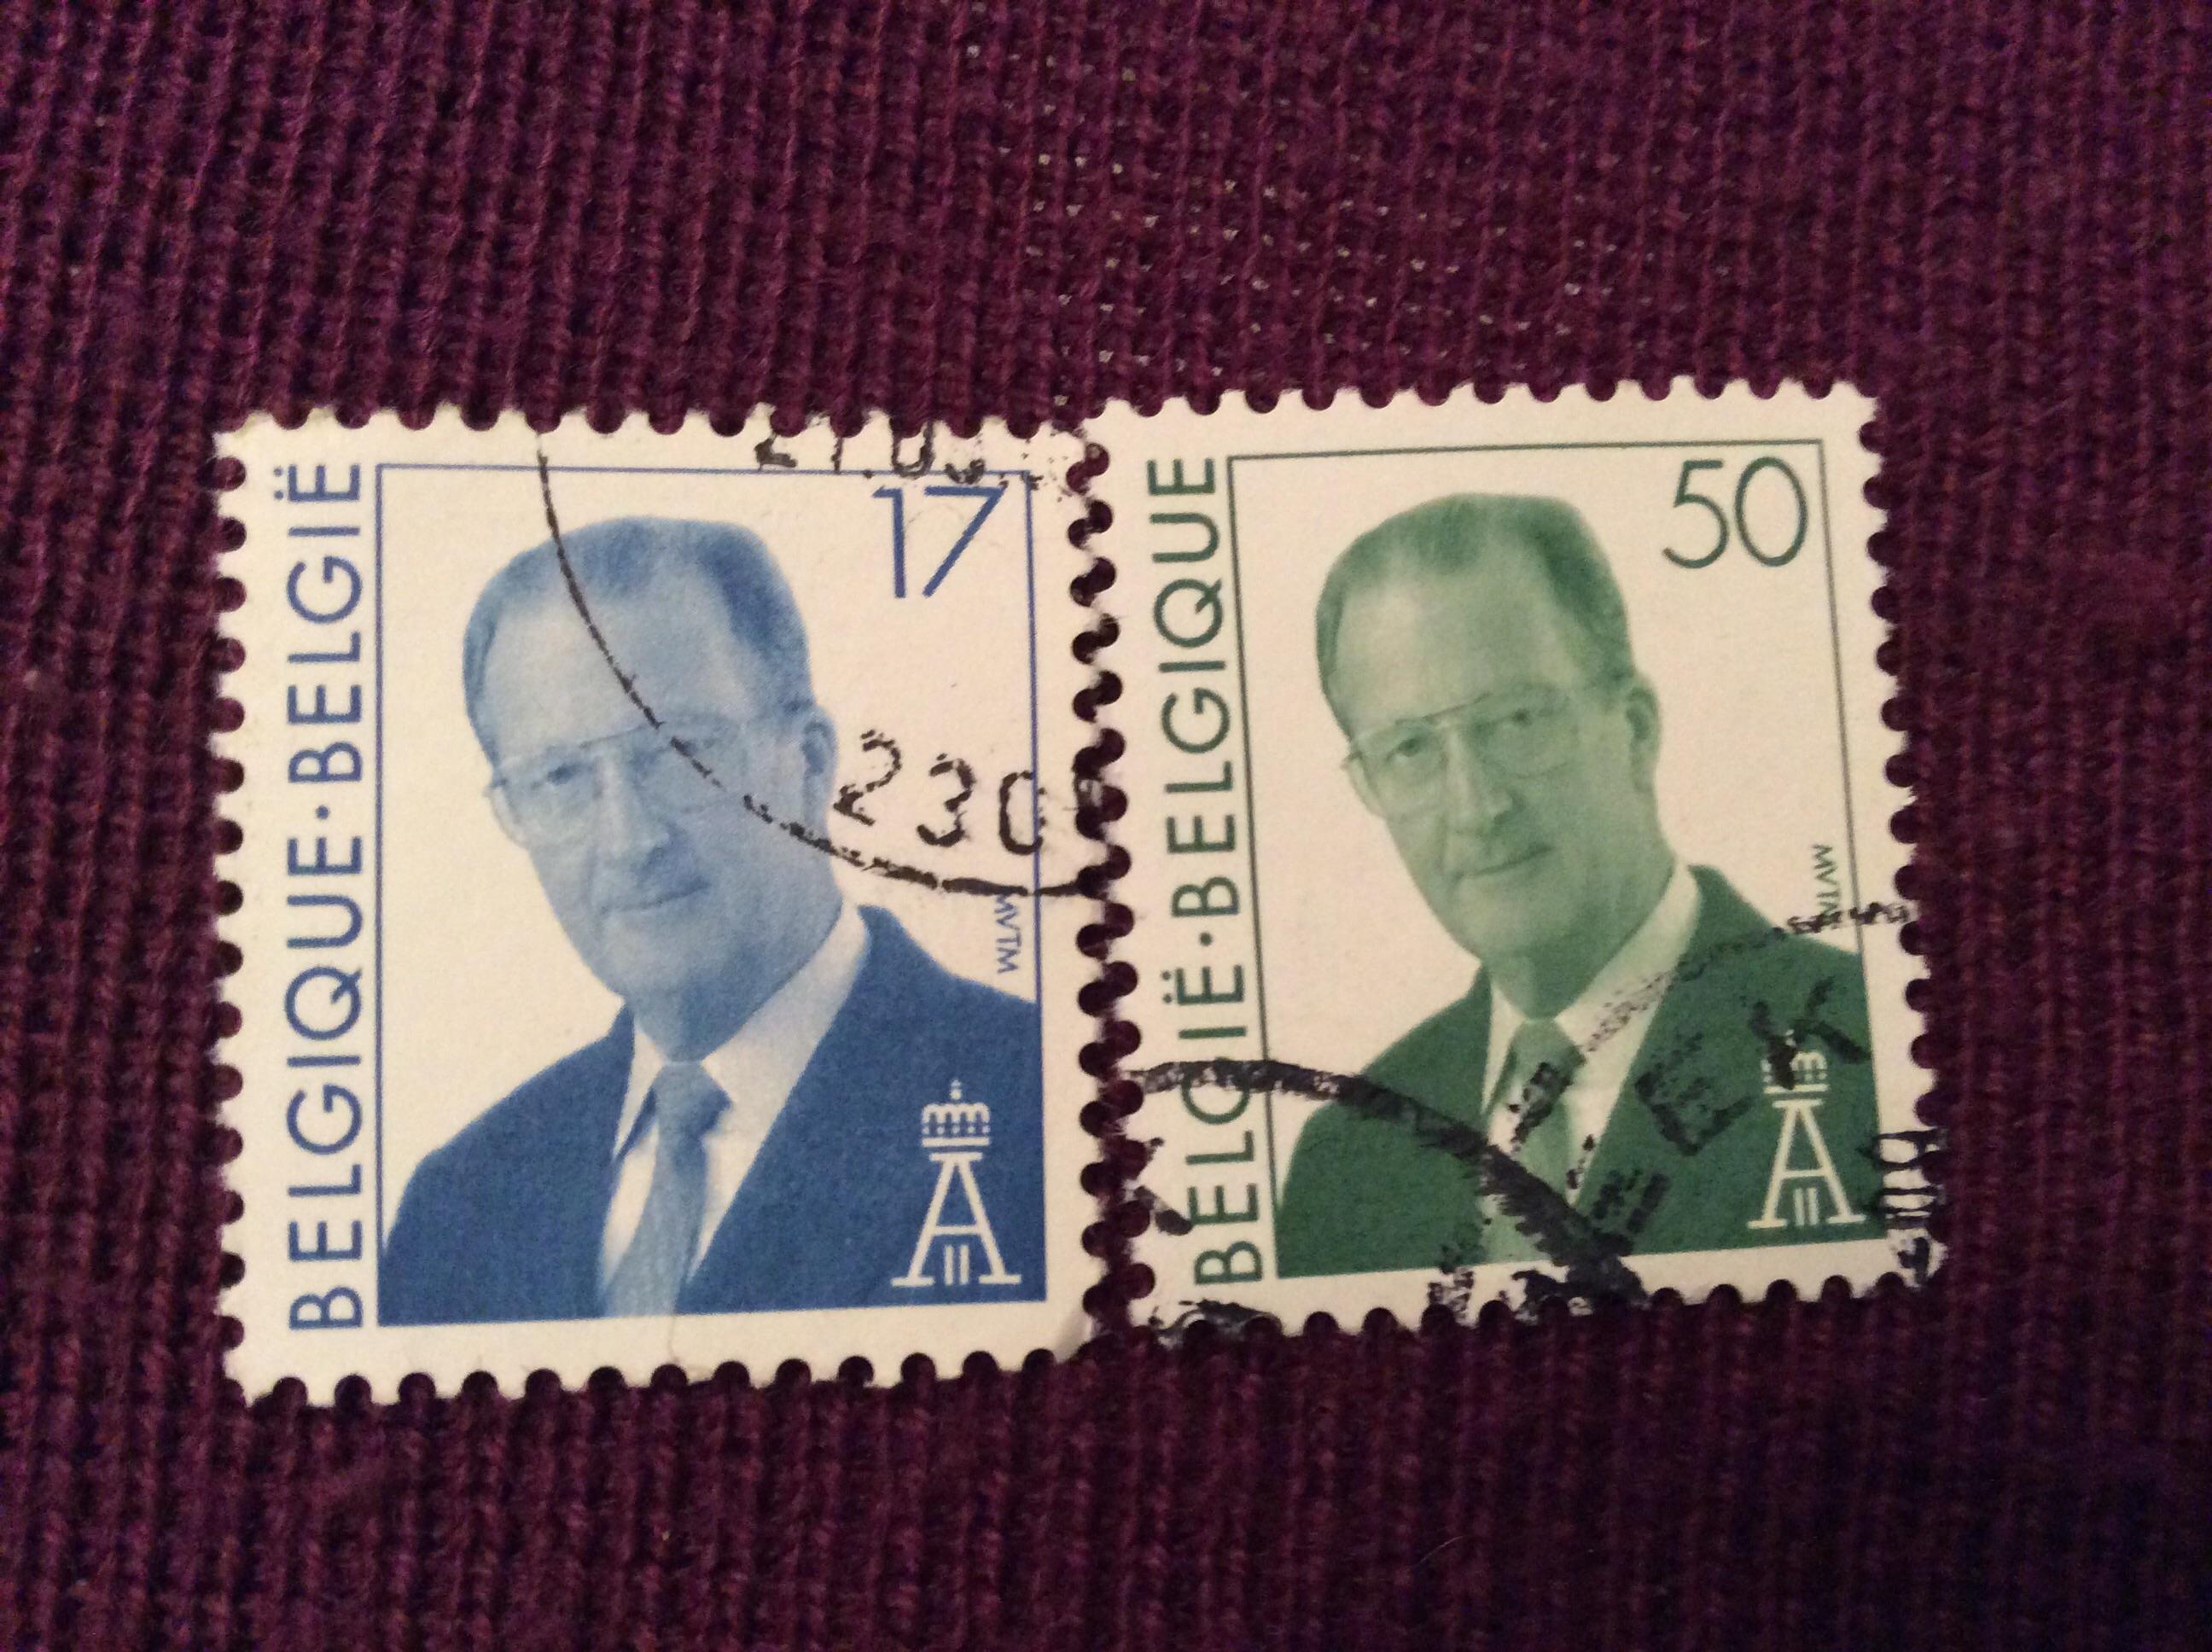 troc de troc 2 timbres belges image 0